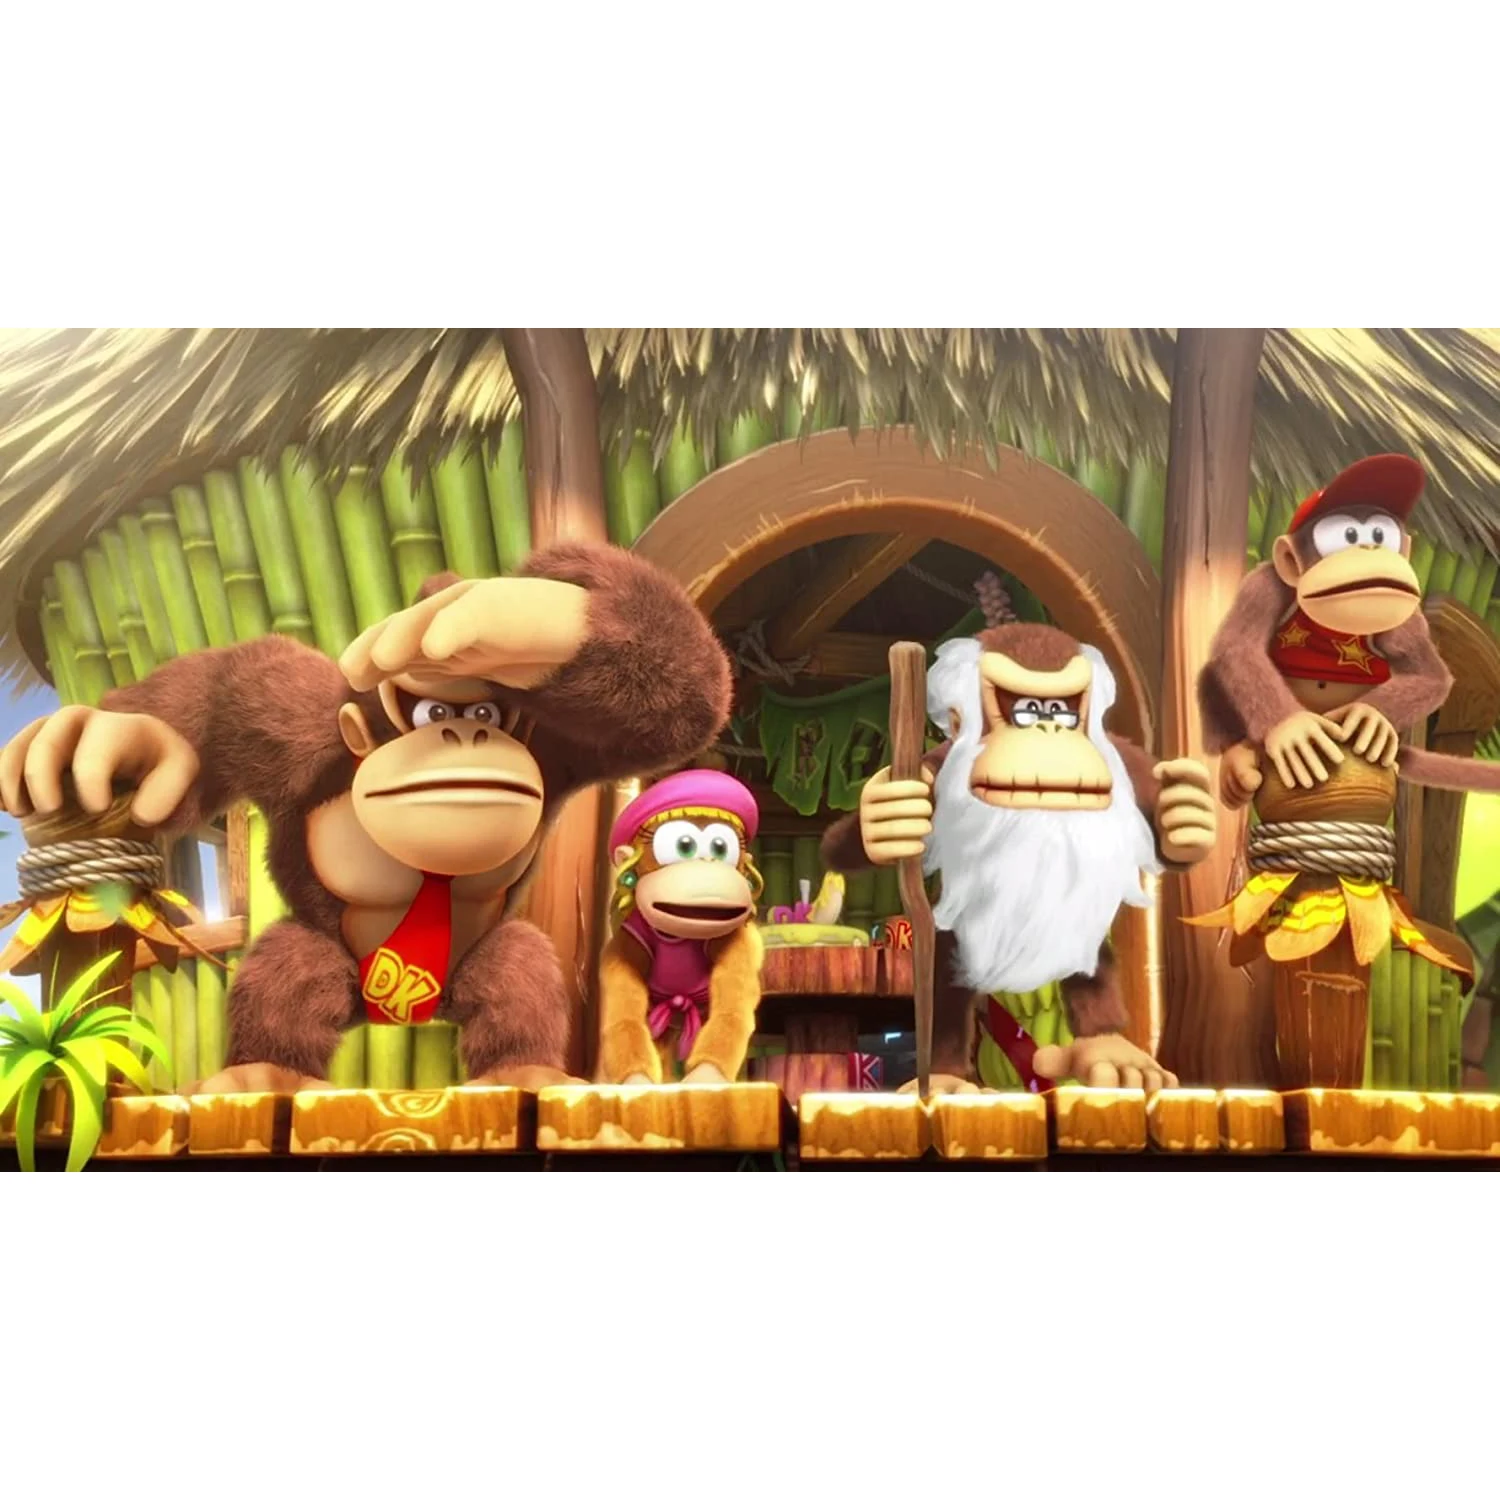 Donkey kong nintendo switch. Донки Конг Нинтендо свитч. Donkey Kong Country Nintendo Switch. Donkey Kong Tropical Freeze Nintendo Switch. Donkey Kong Country: Tropical Freeze.